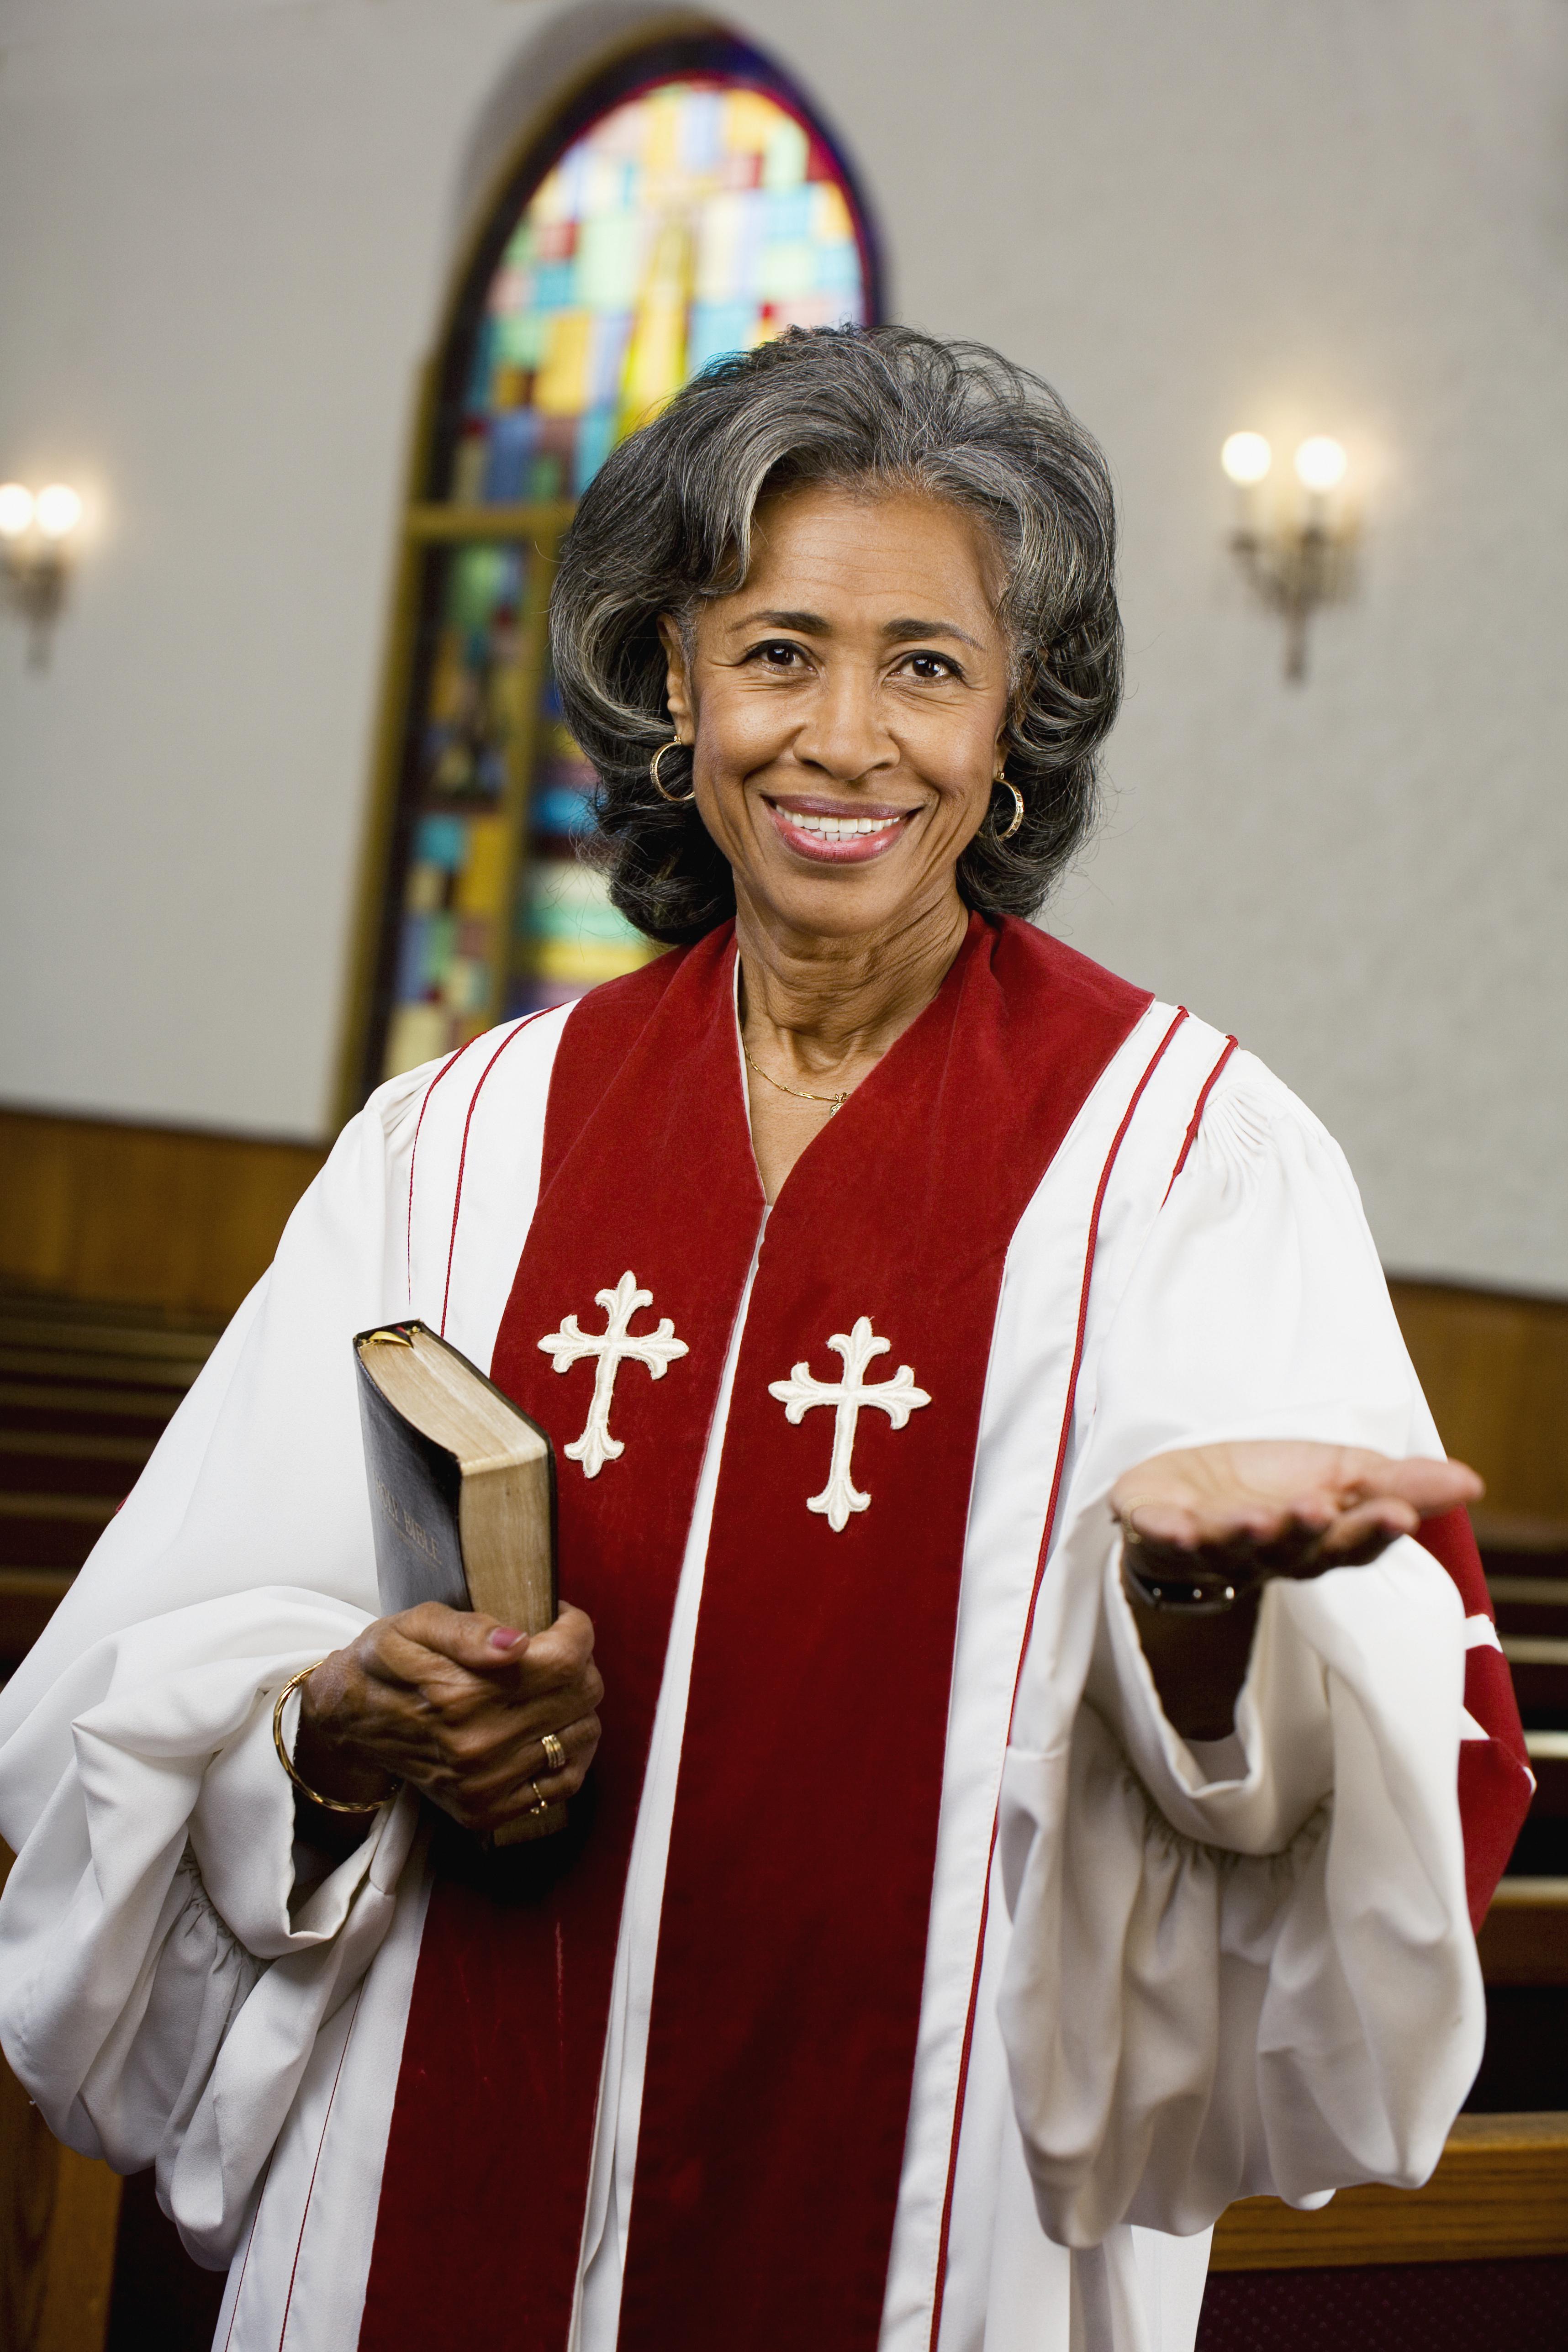 New Survey Reveals Americans Okay With Female Pastors